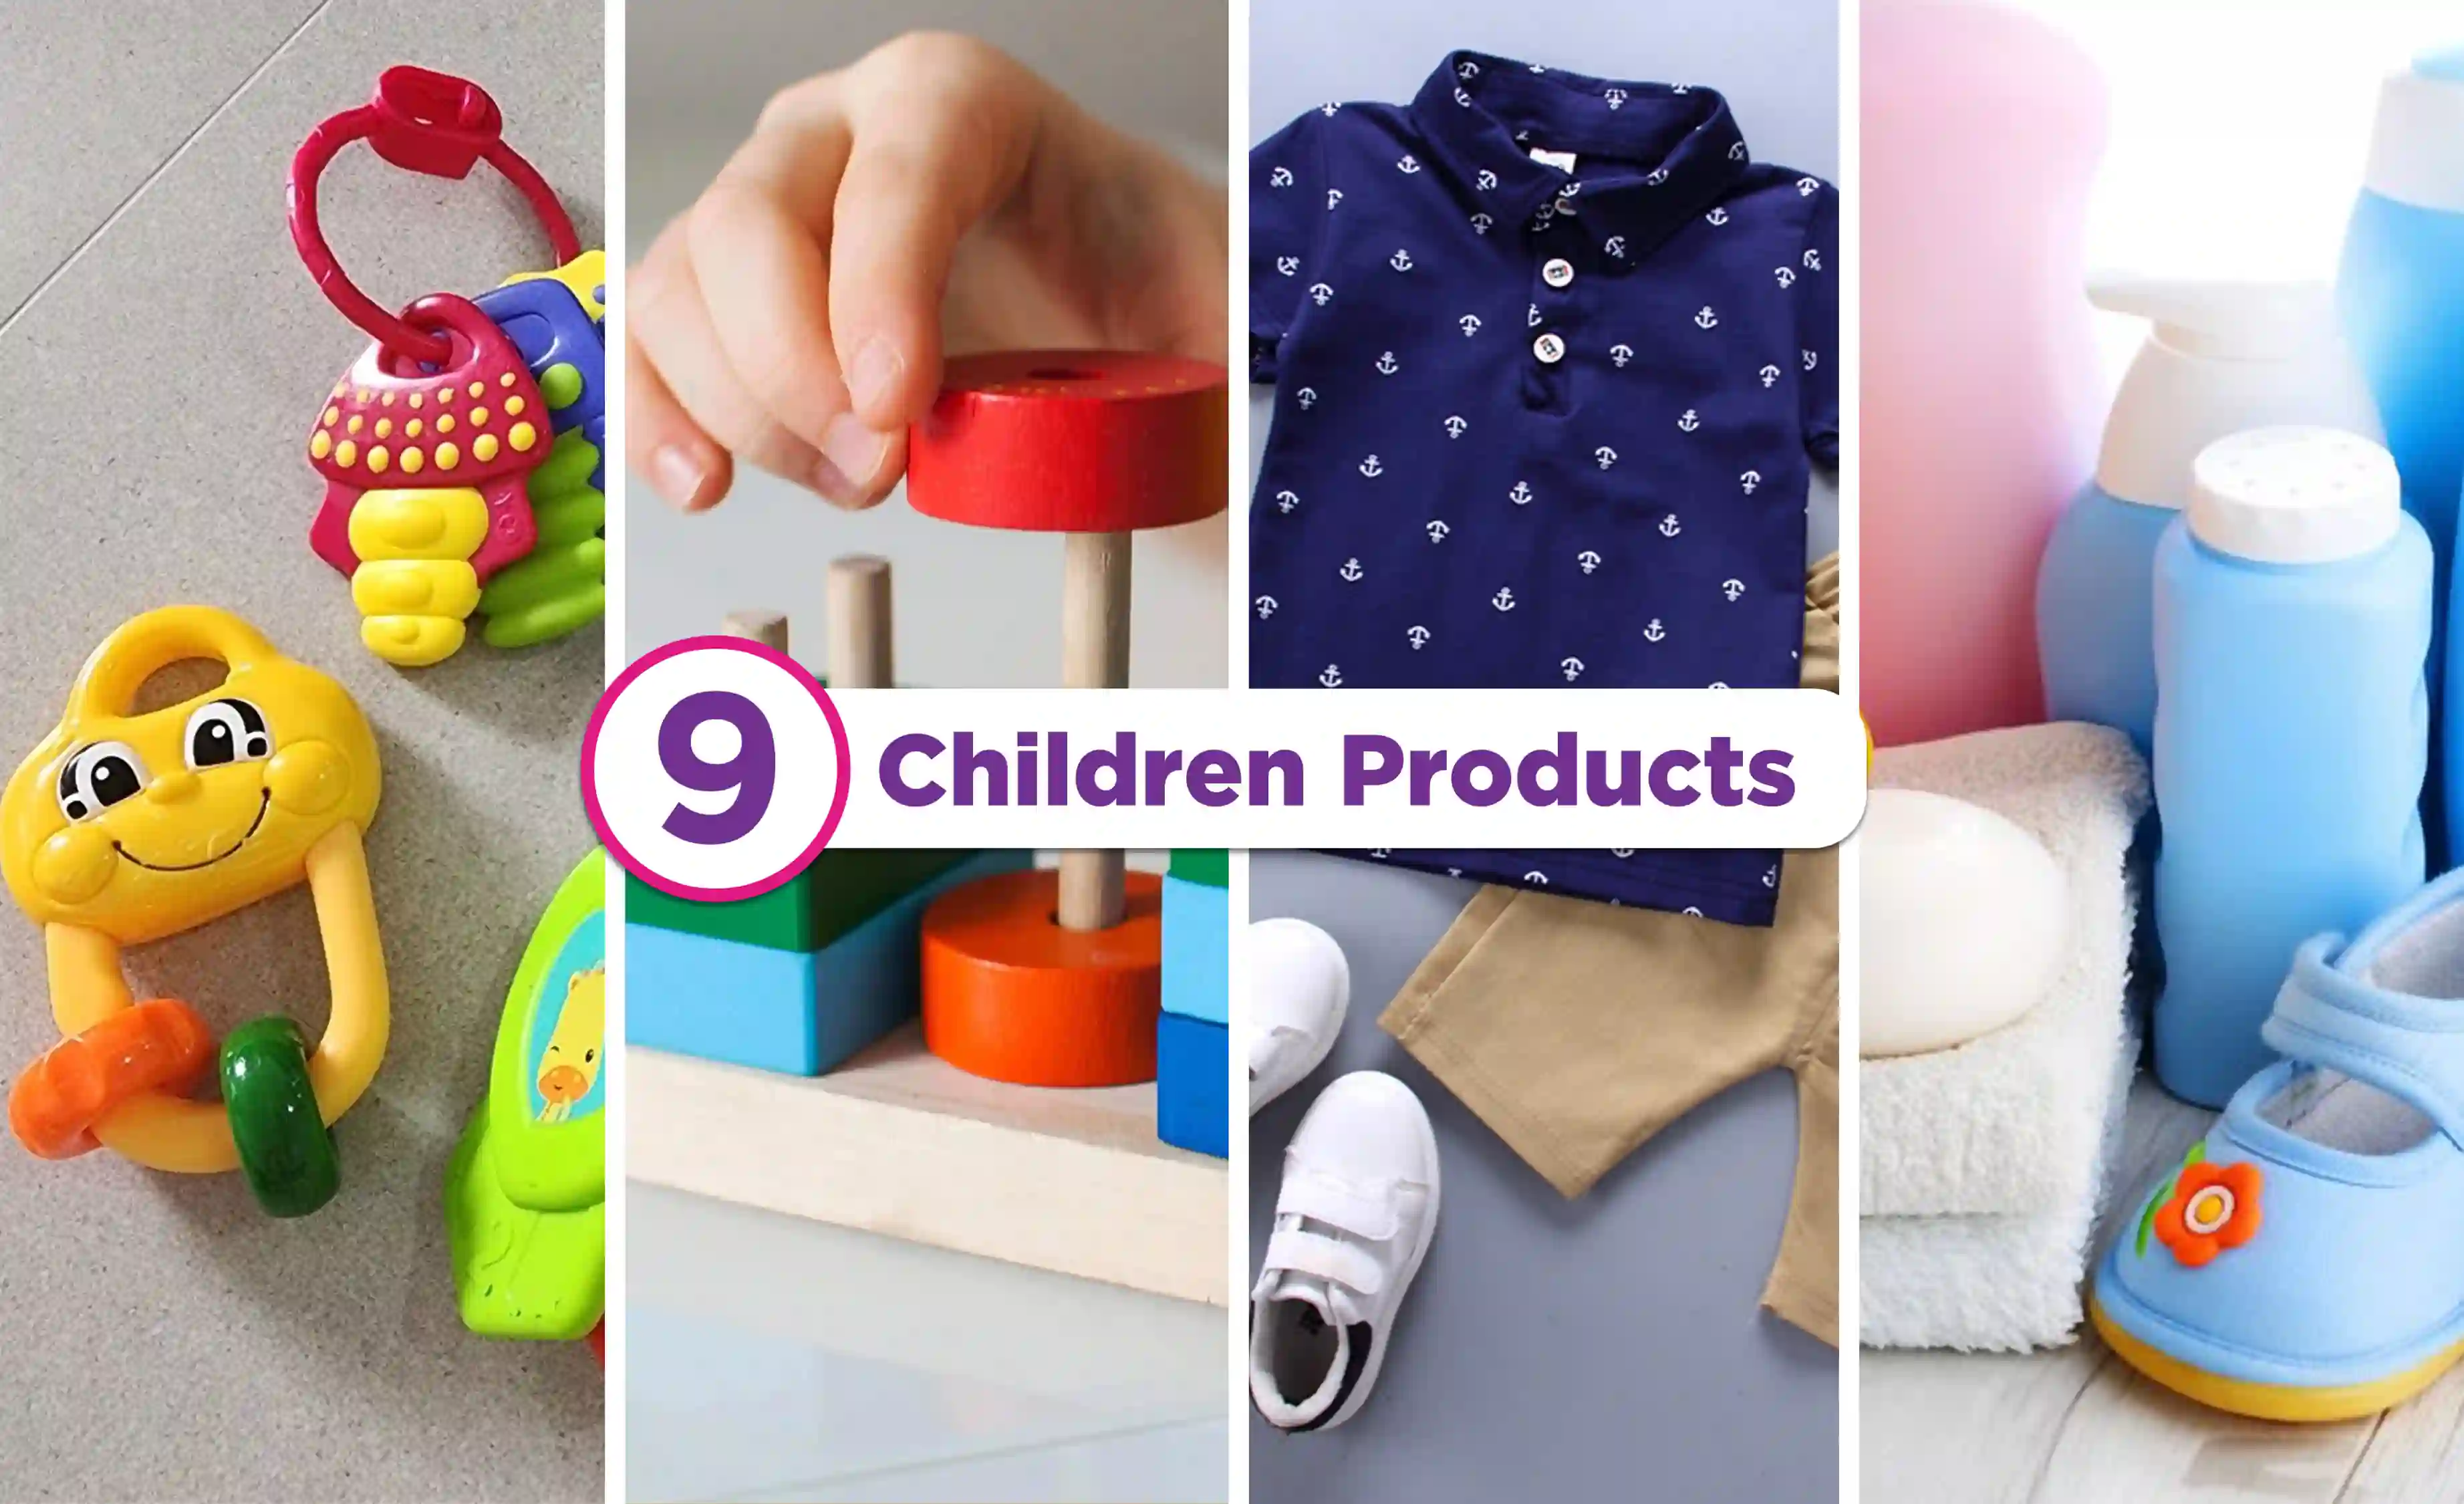 Children Products